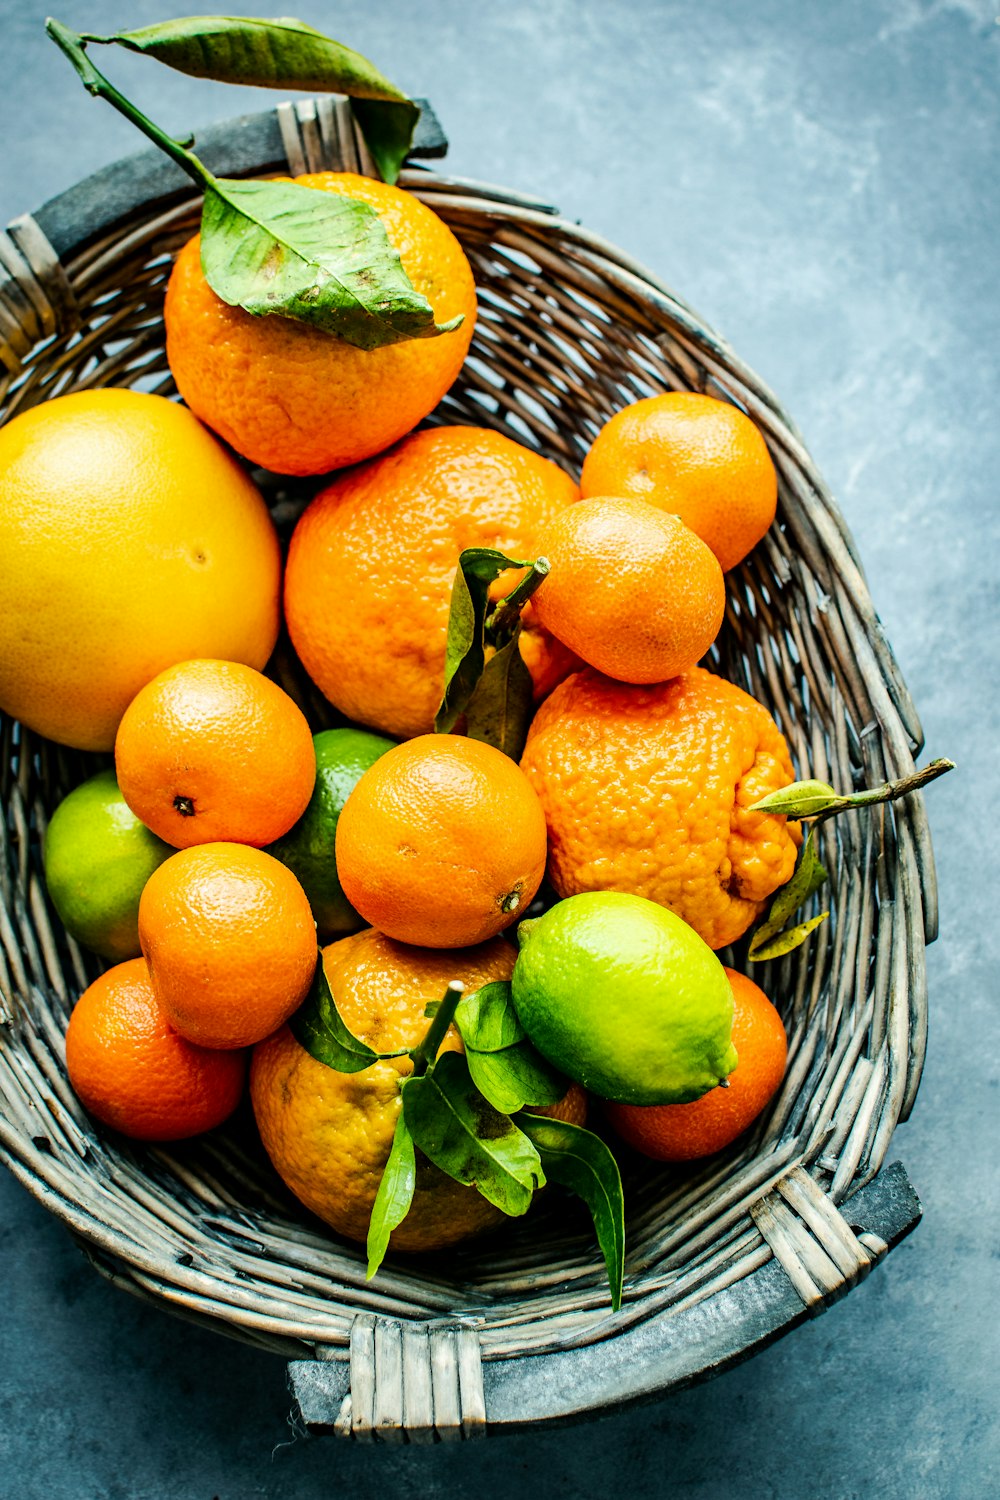 orange and lemon fruits on gray wicker basket